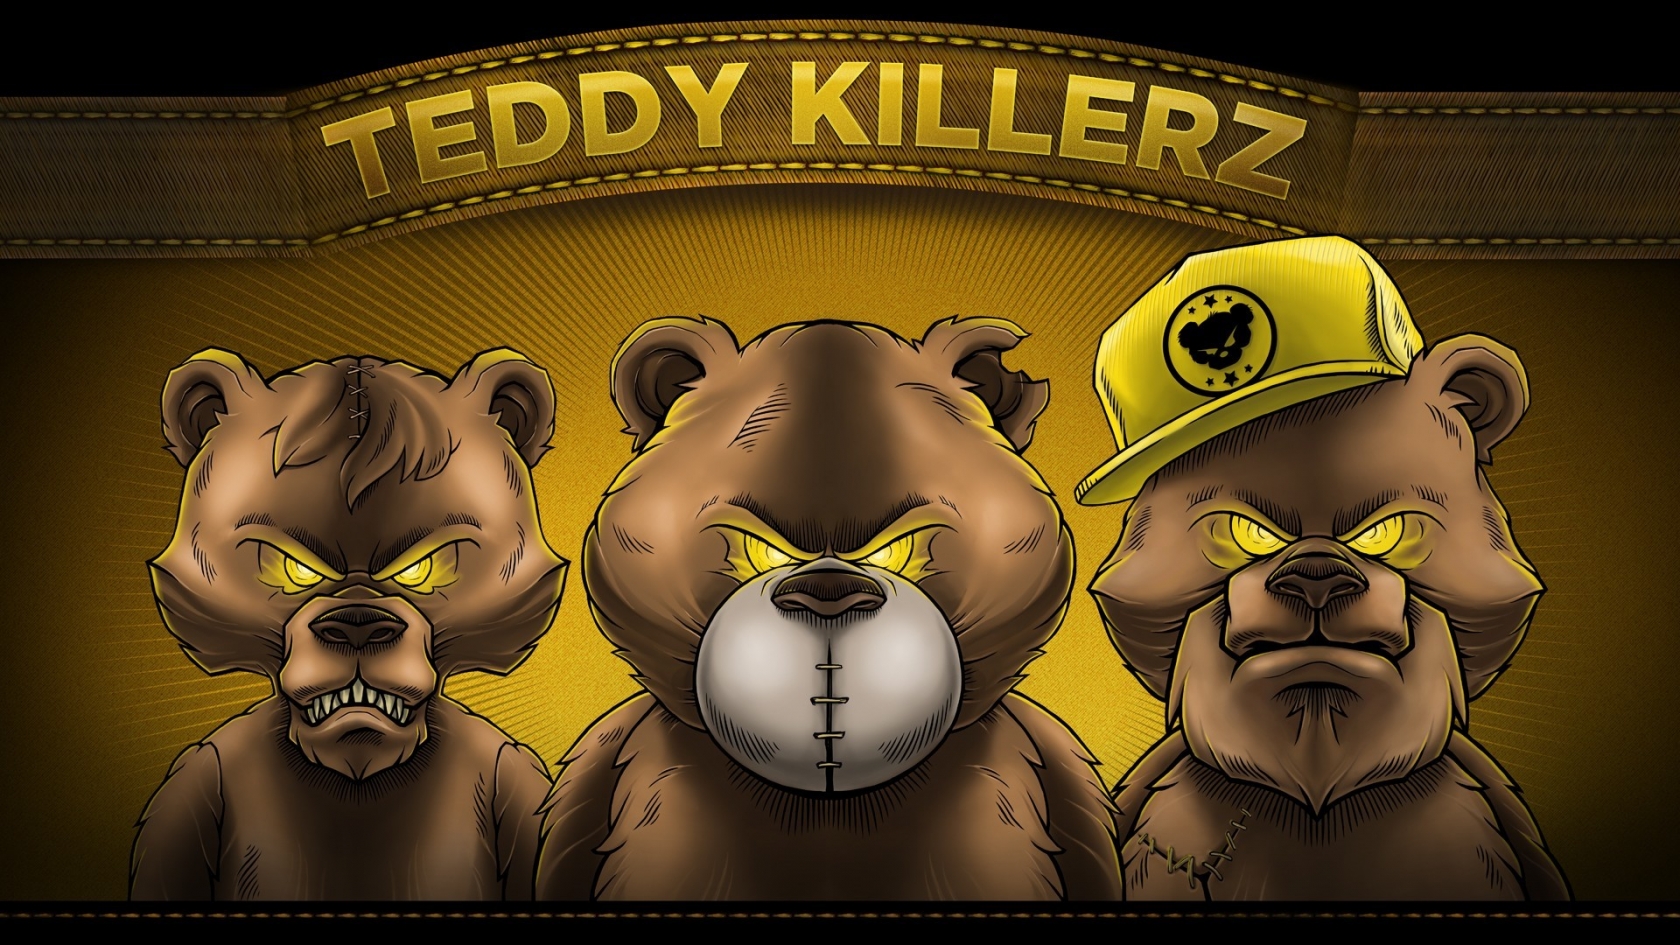 Teddy Killerz Poster for 1680 x 945 HDTV resolution